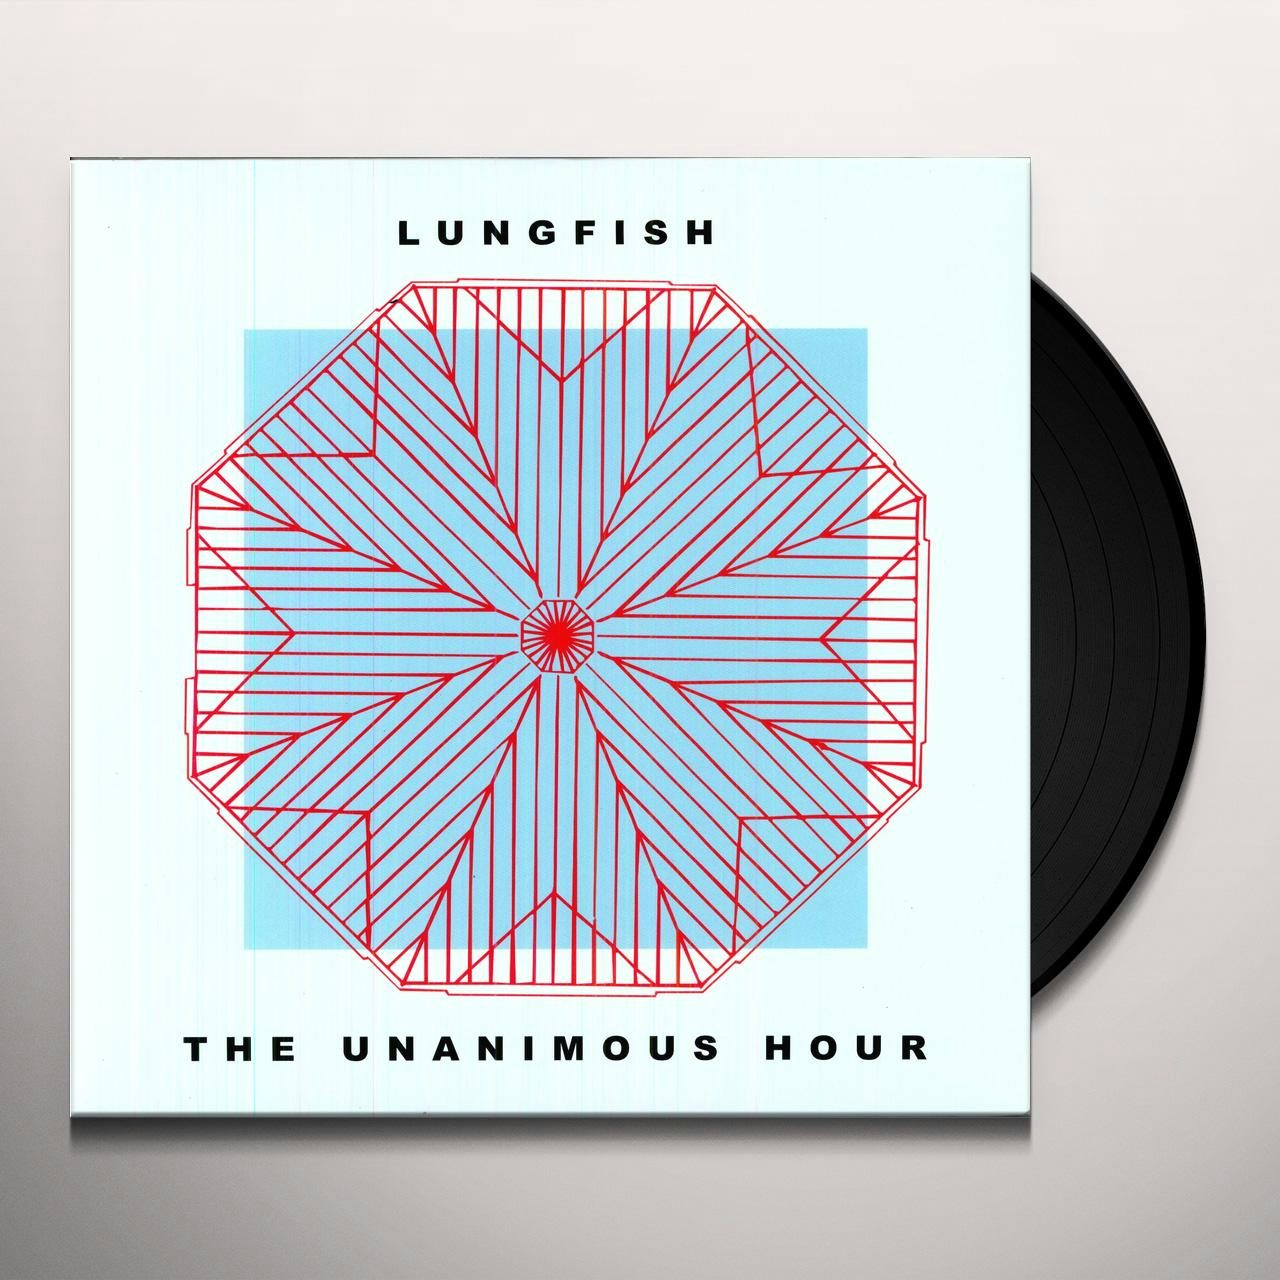 UNANIMOUS HOUR Vinyl Record - Lungfish